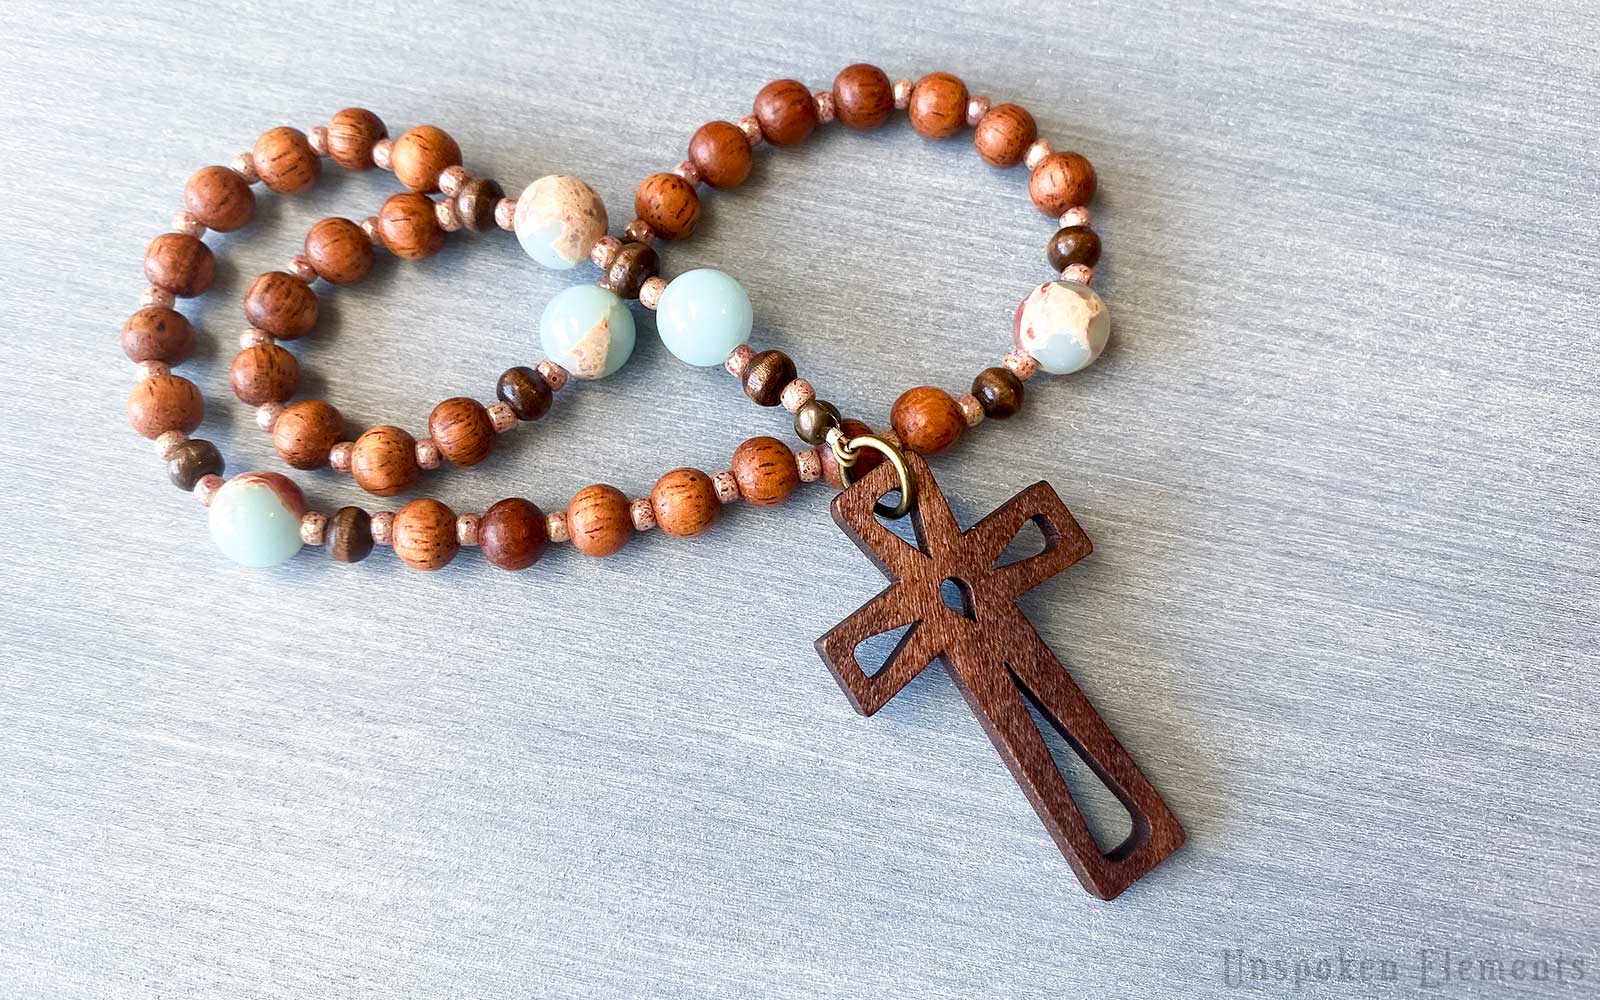 Christian Prayer Beads by Unspoken Elements